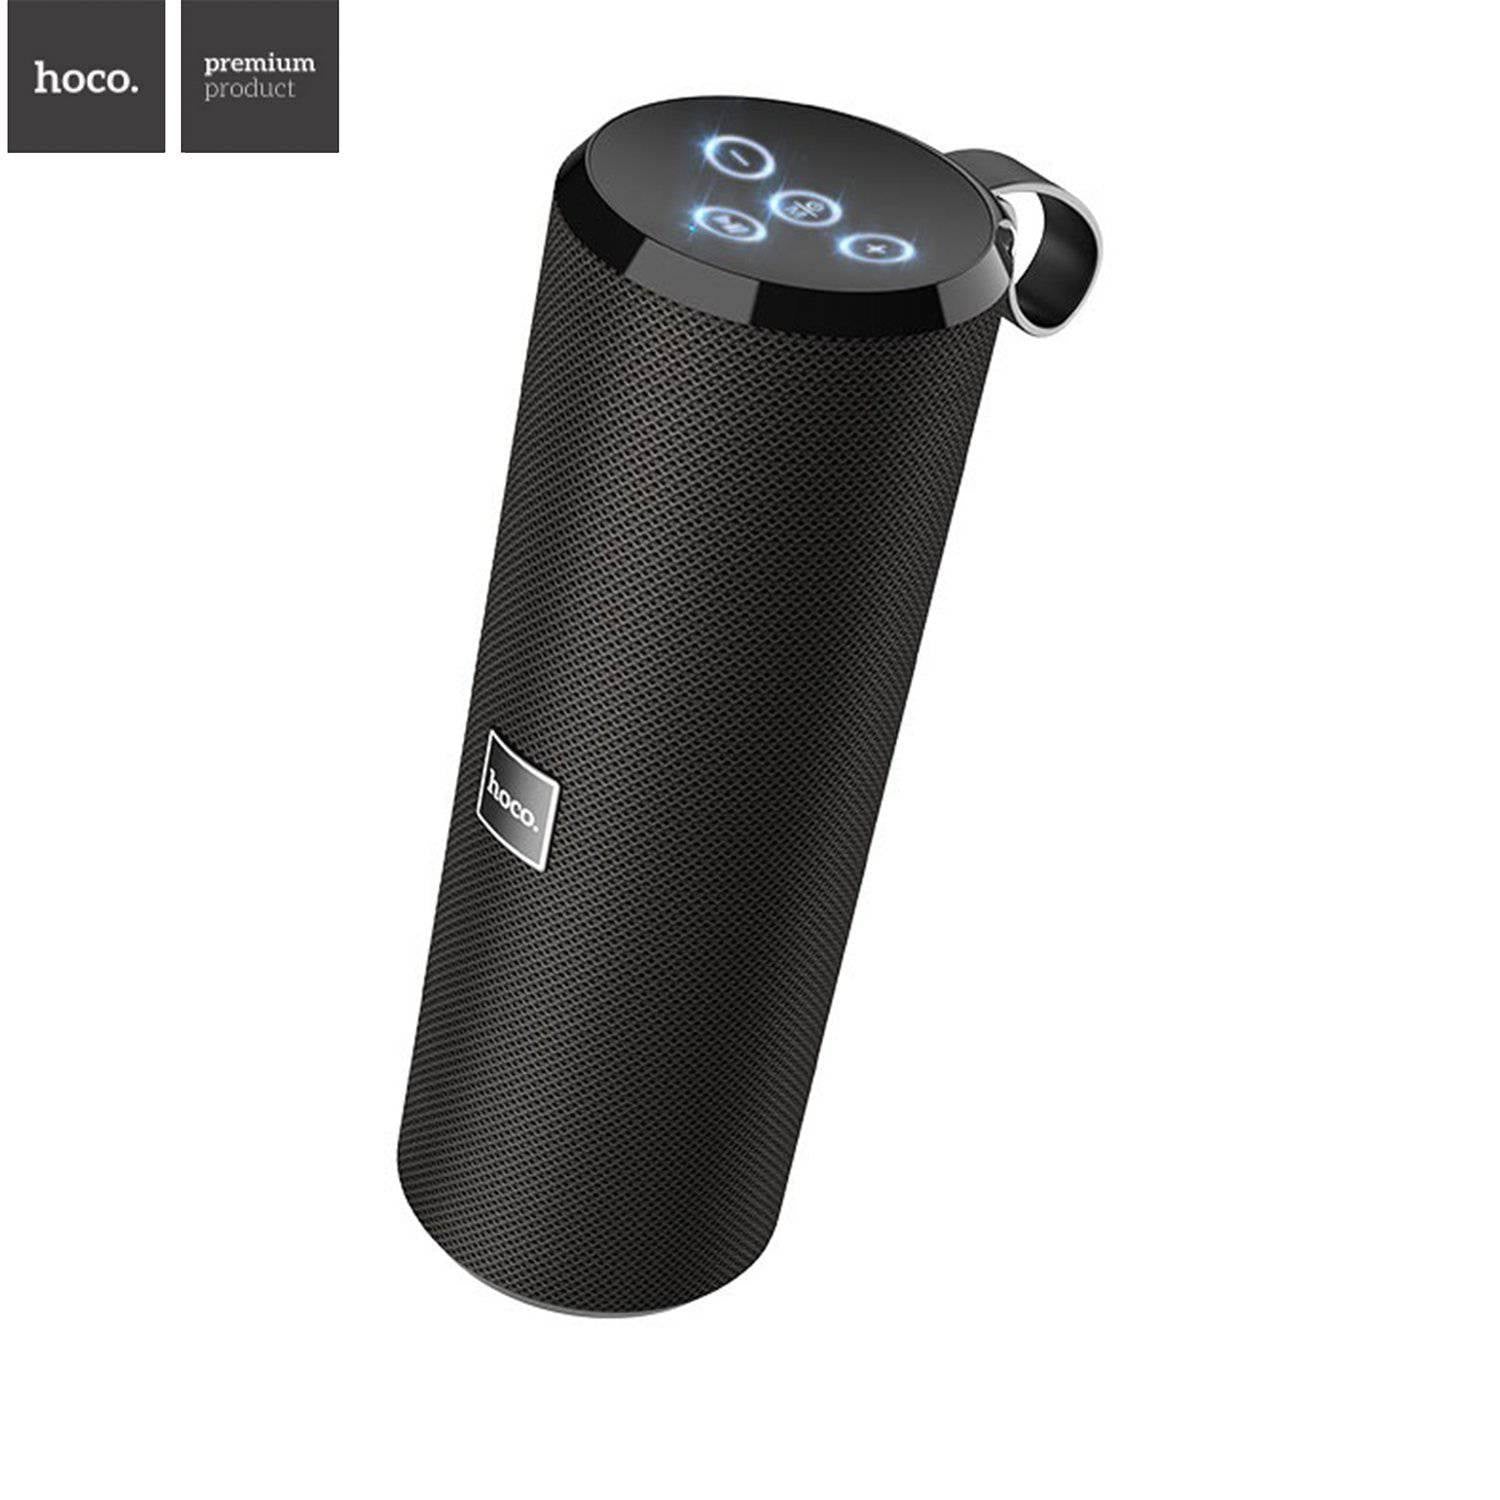 hoco. Wireless speaker “BS33 Voice” portable loudspeaker | Shopna Online Store .